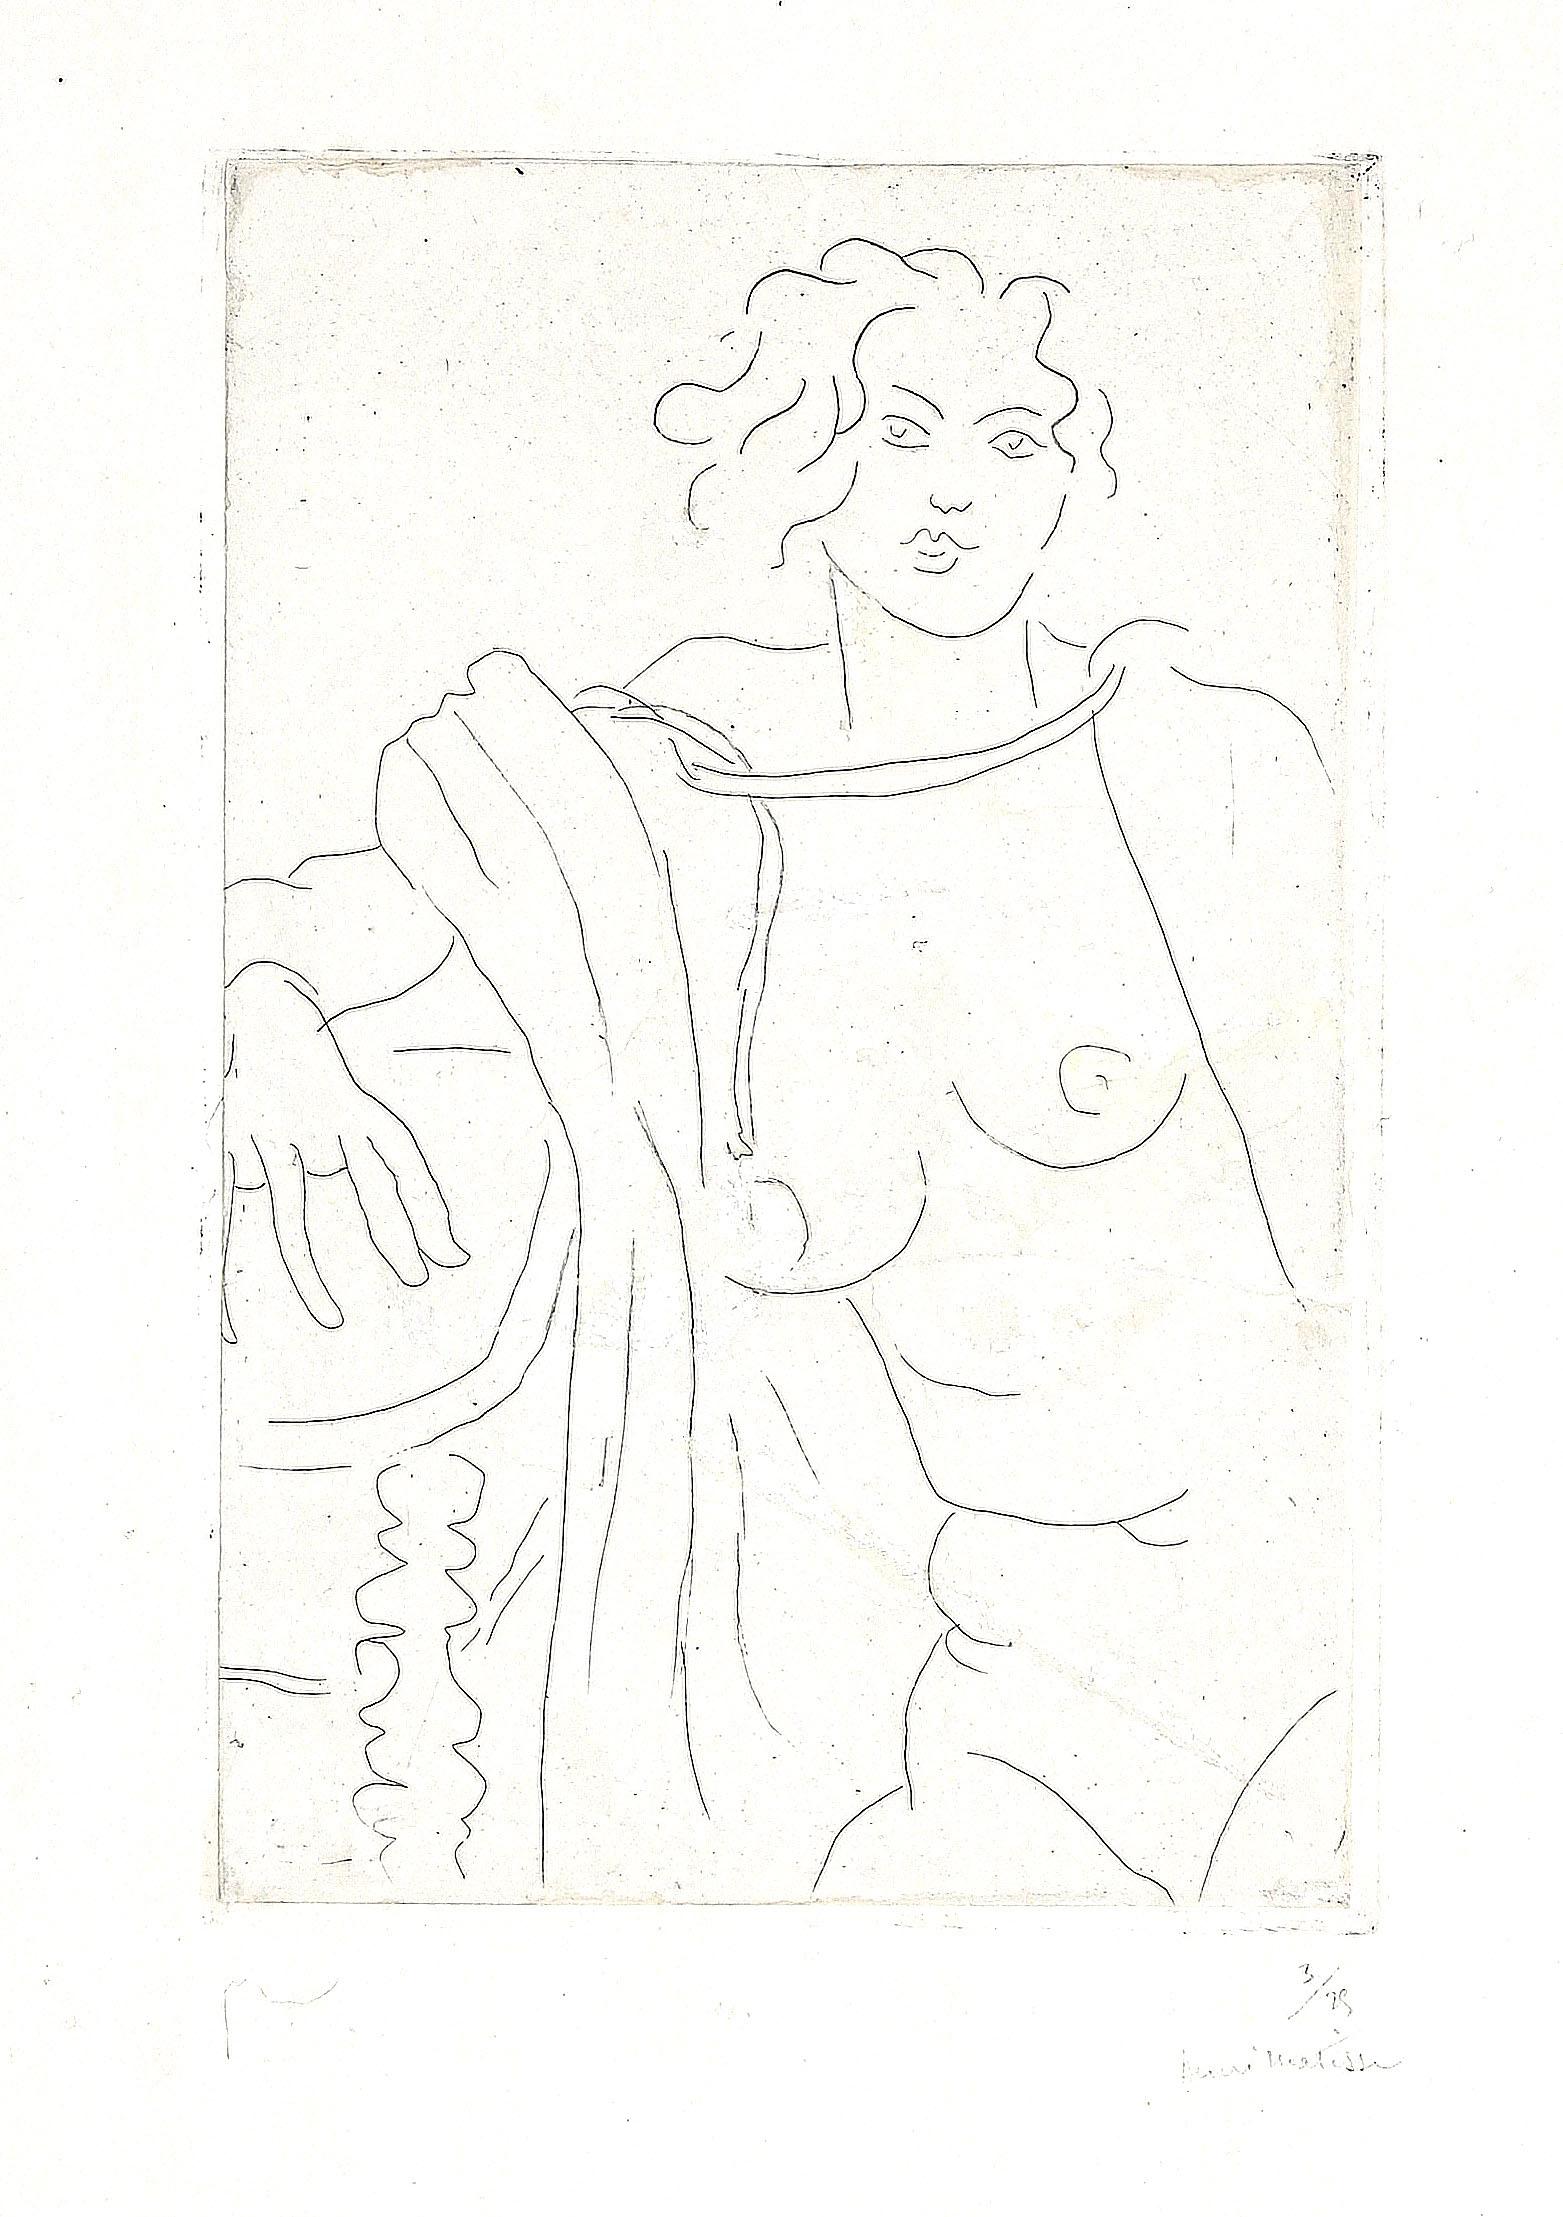 Henri Matisse Figurative Print - Figure assise, le bras droit appuye sur une table - Etching by H. Matisse - 1929